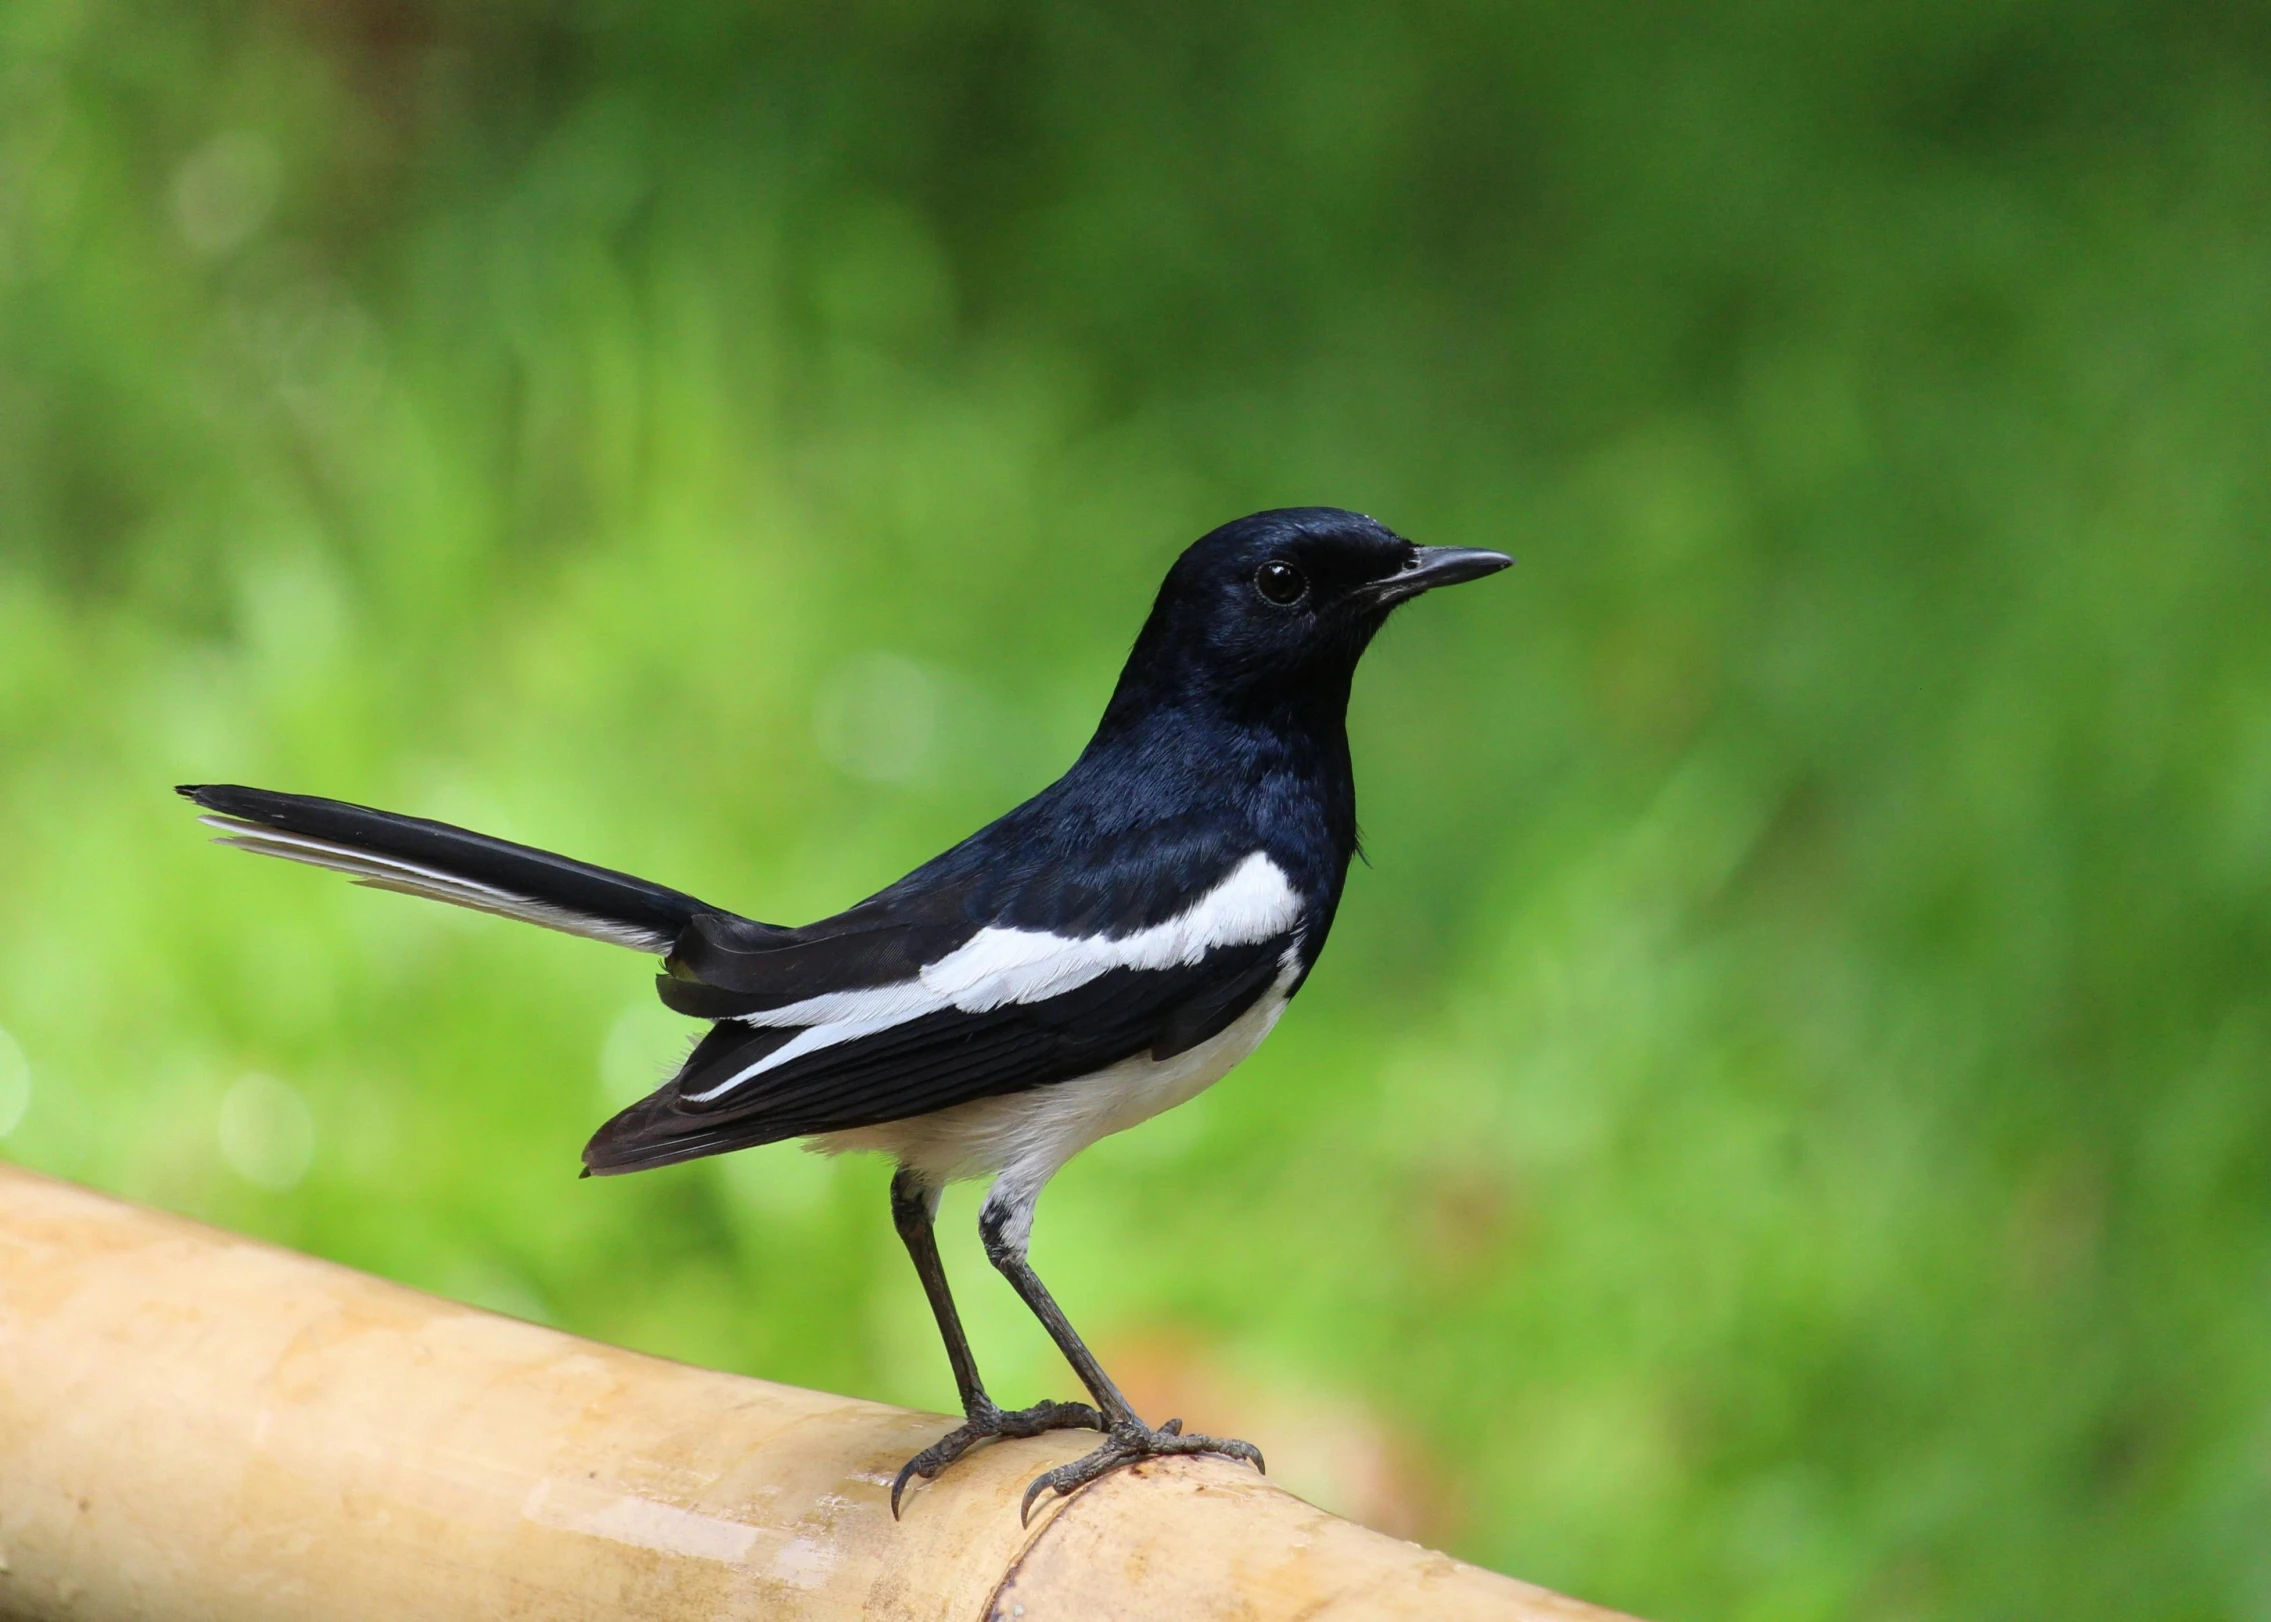 a black bird is standing on a bamboo bar